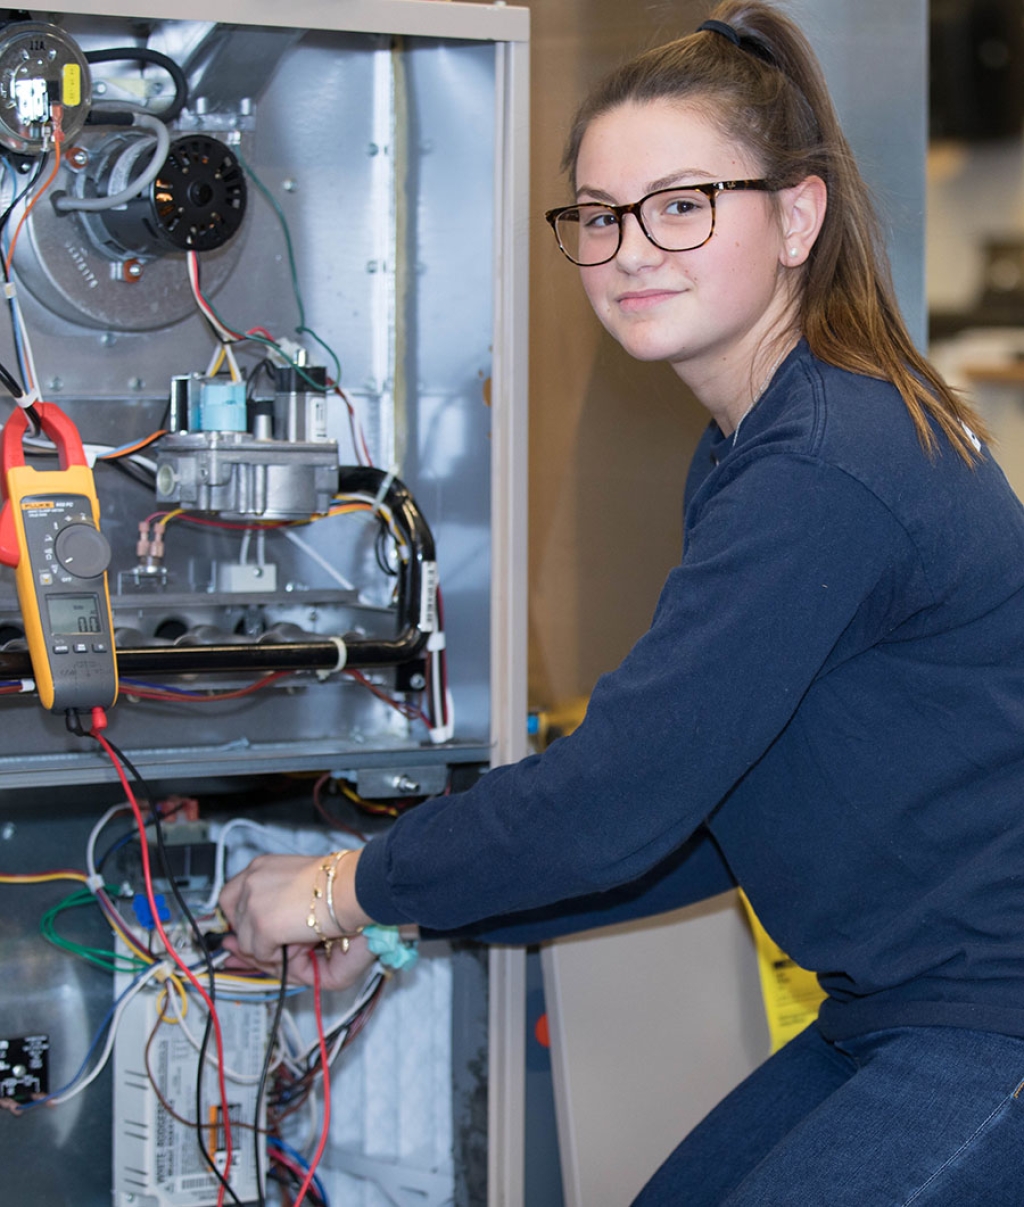 A female student works on an HVAC unit,